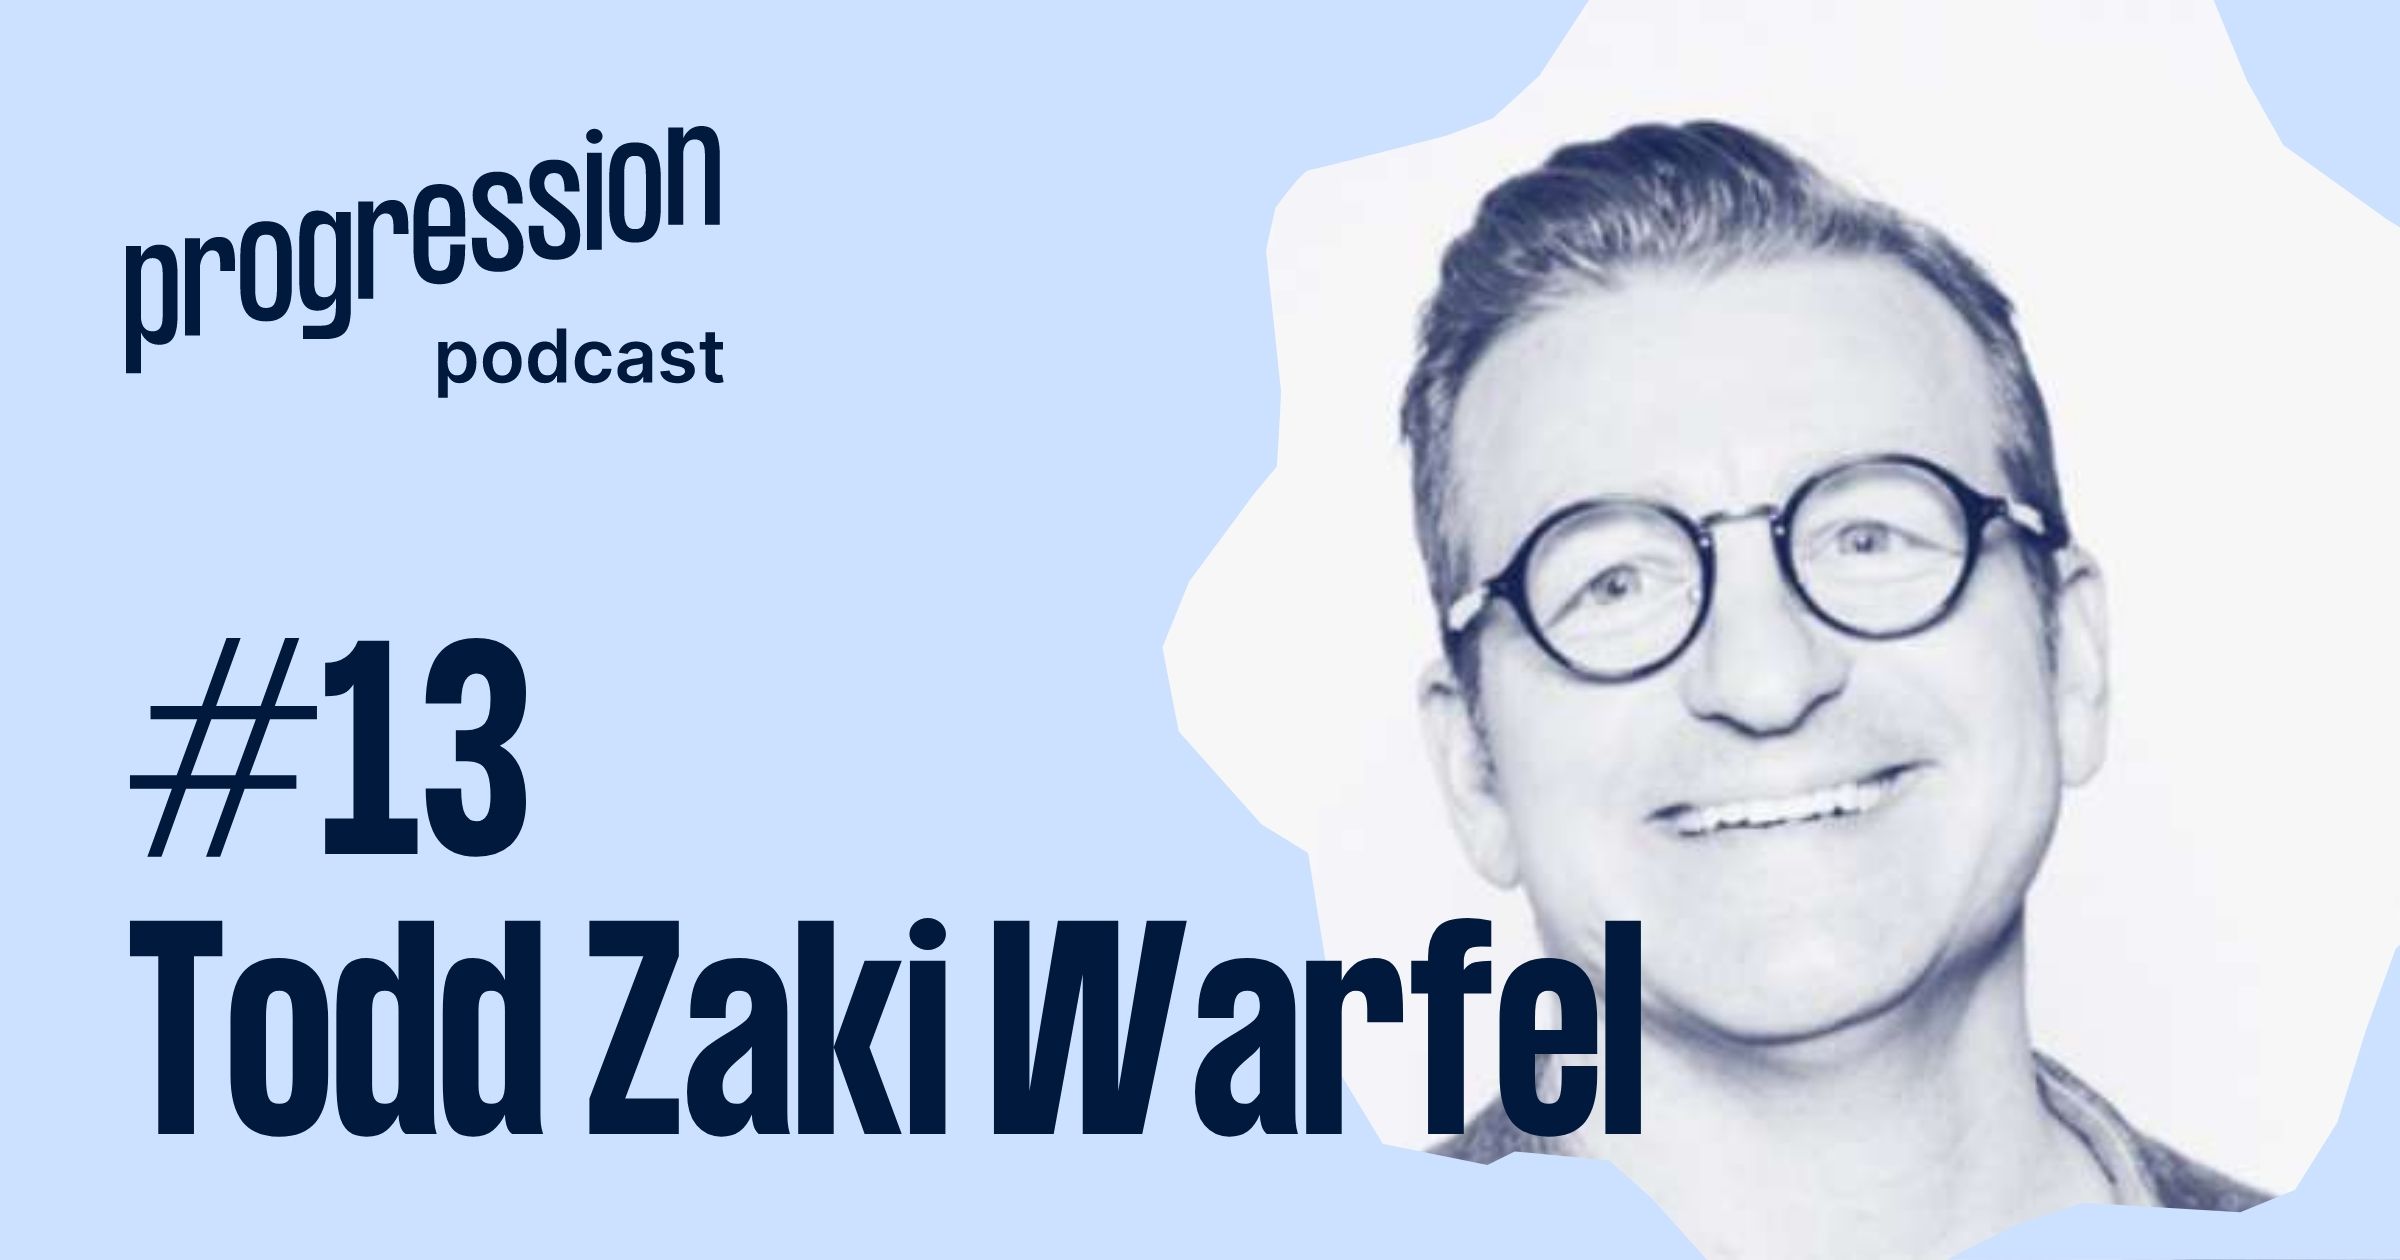 Podcast #14: Todd Zaki Warfel (Leadership coach, Design Career Index report) on frameworks and job satisfaction